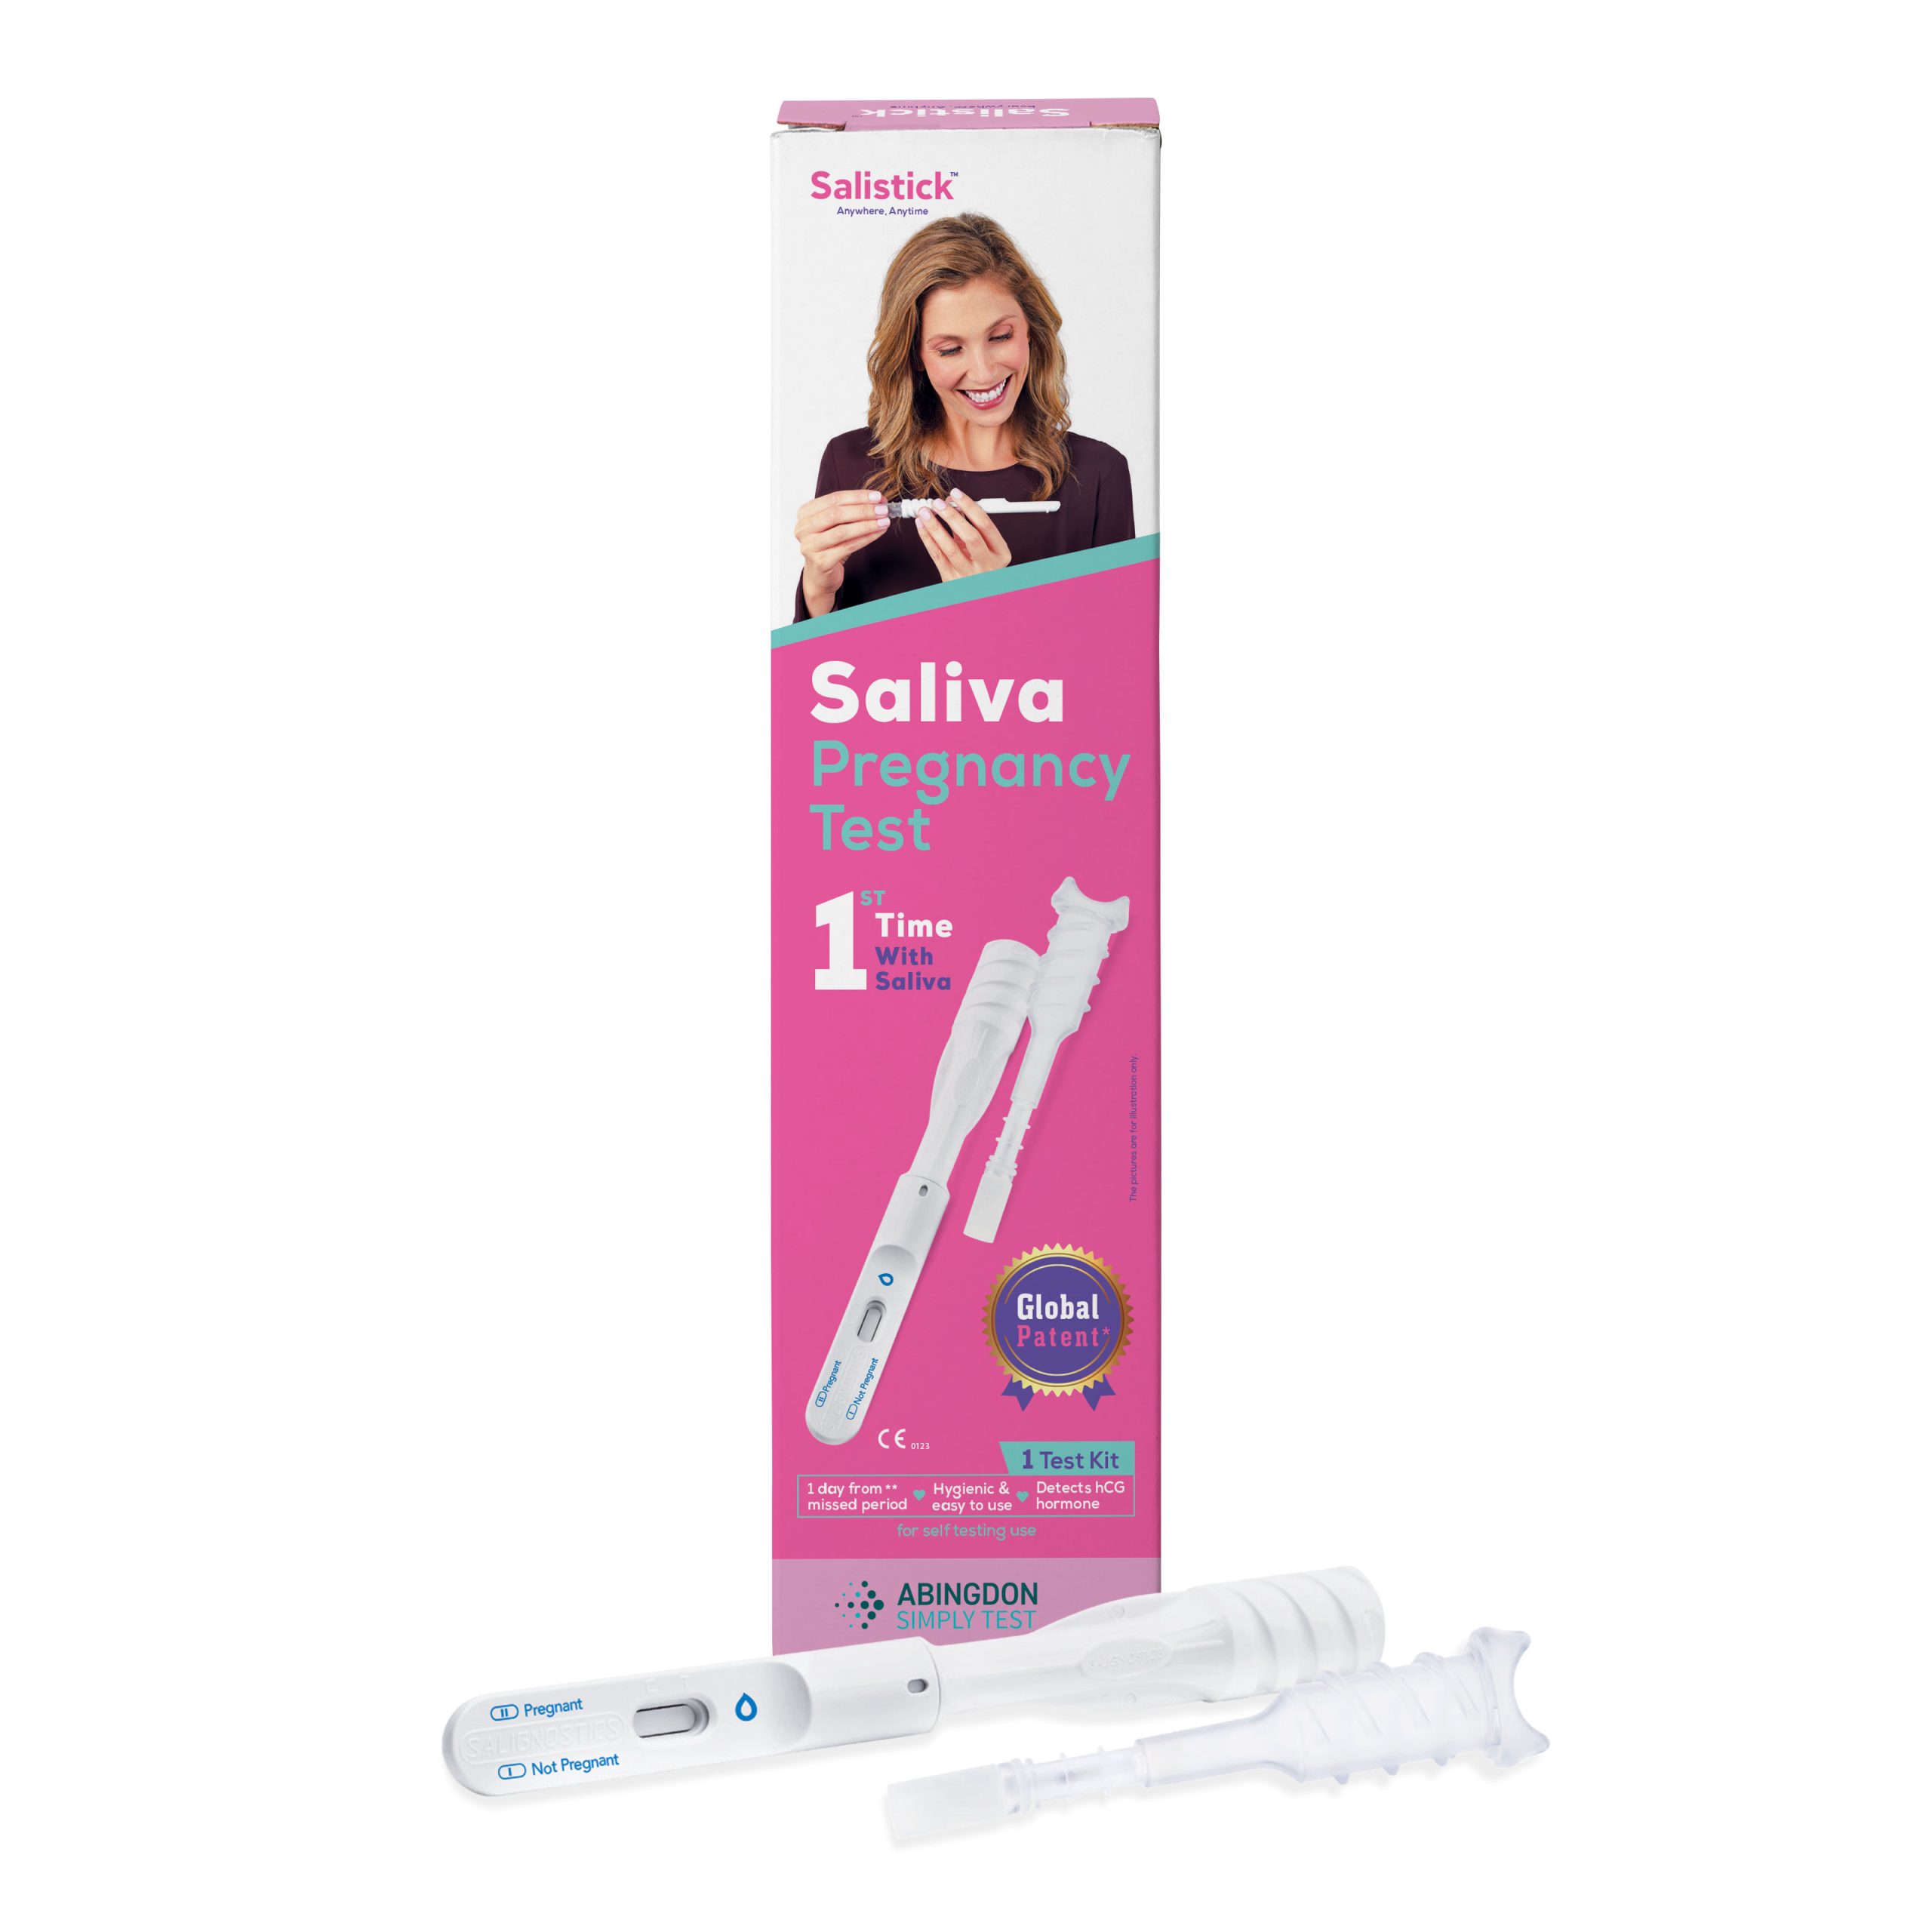 Saliva pregnancy test